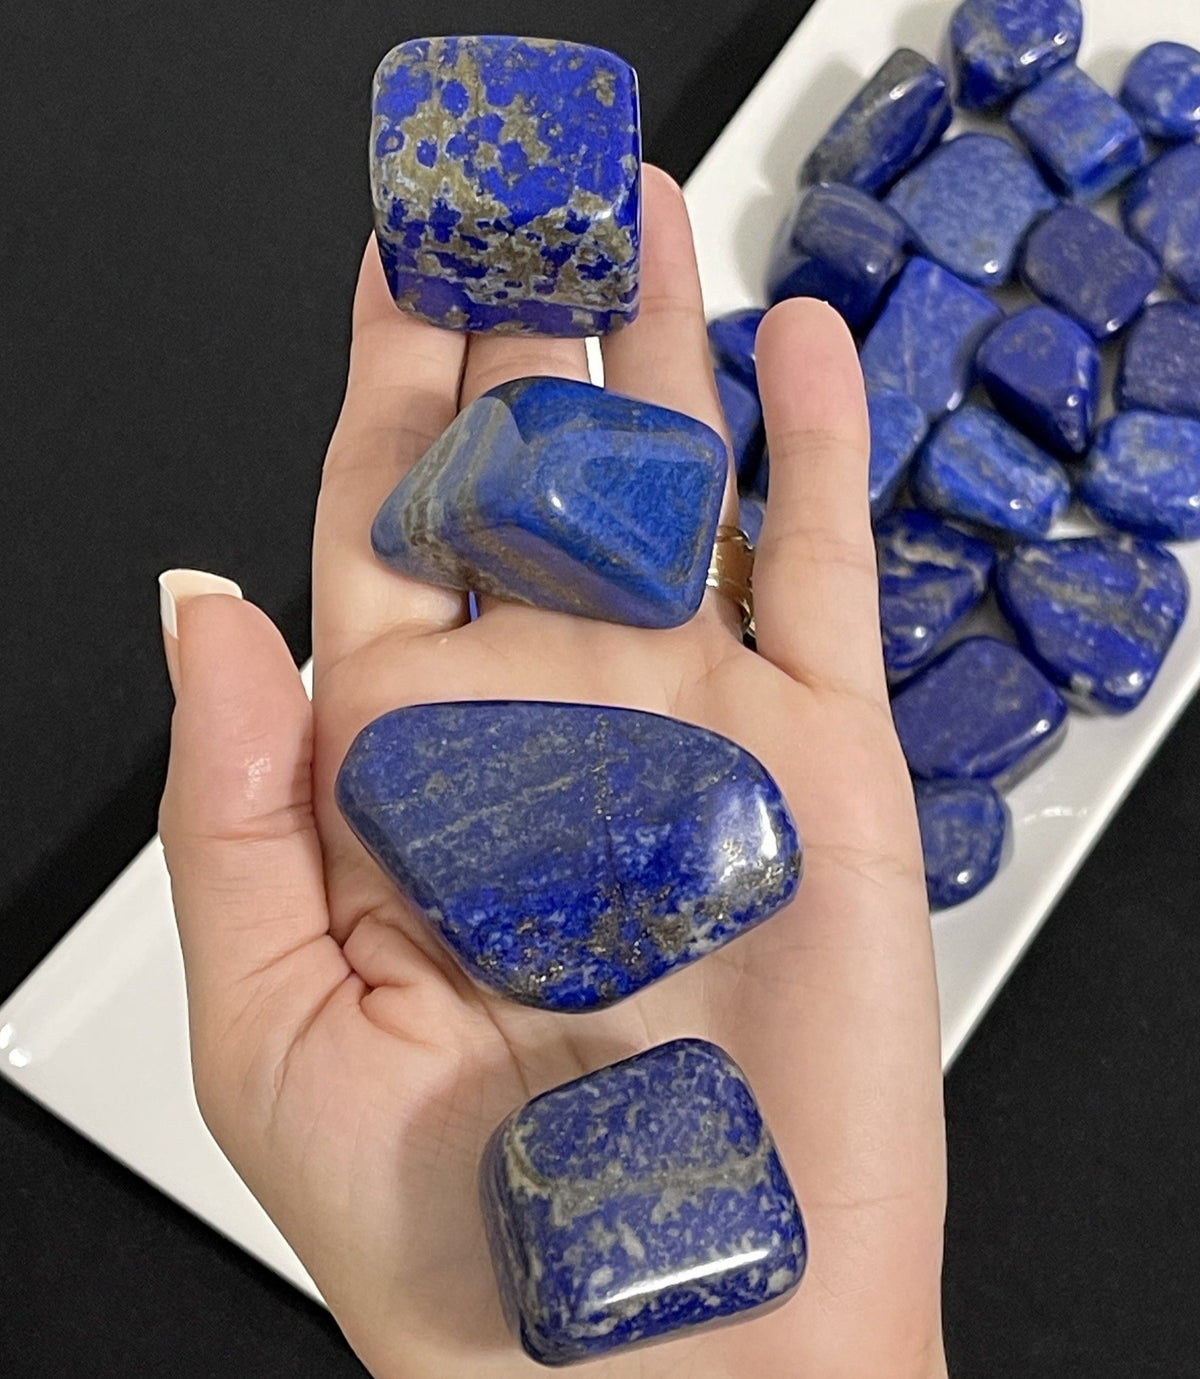 Lapis Lazuli Some Larger Tumbled Stone | Natural Polished | High Quality